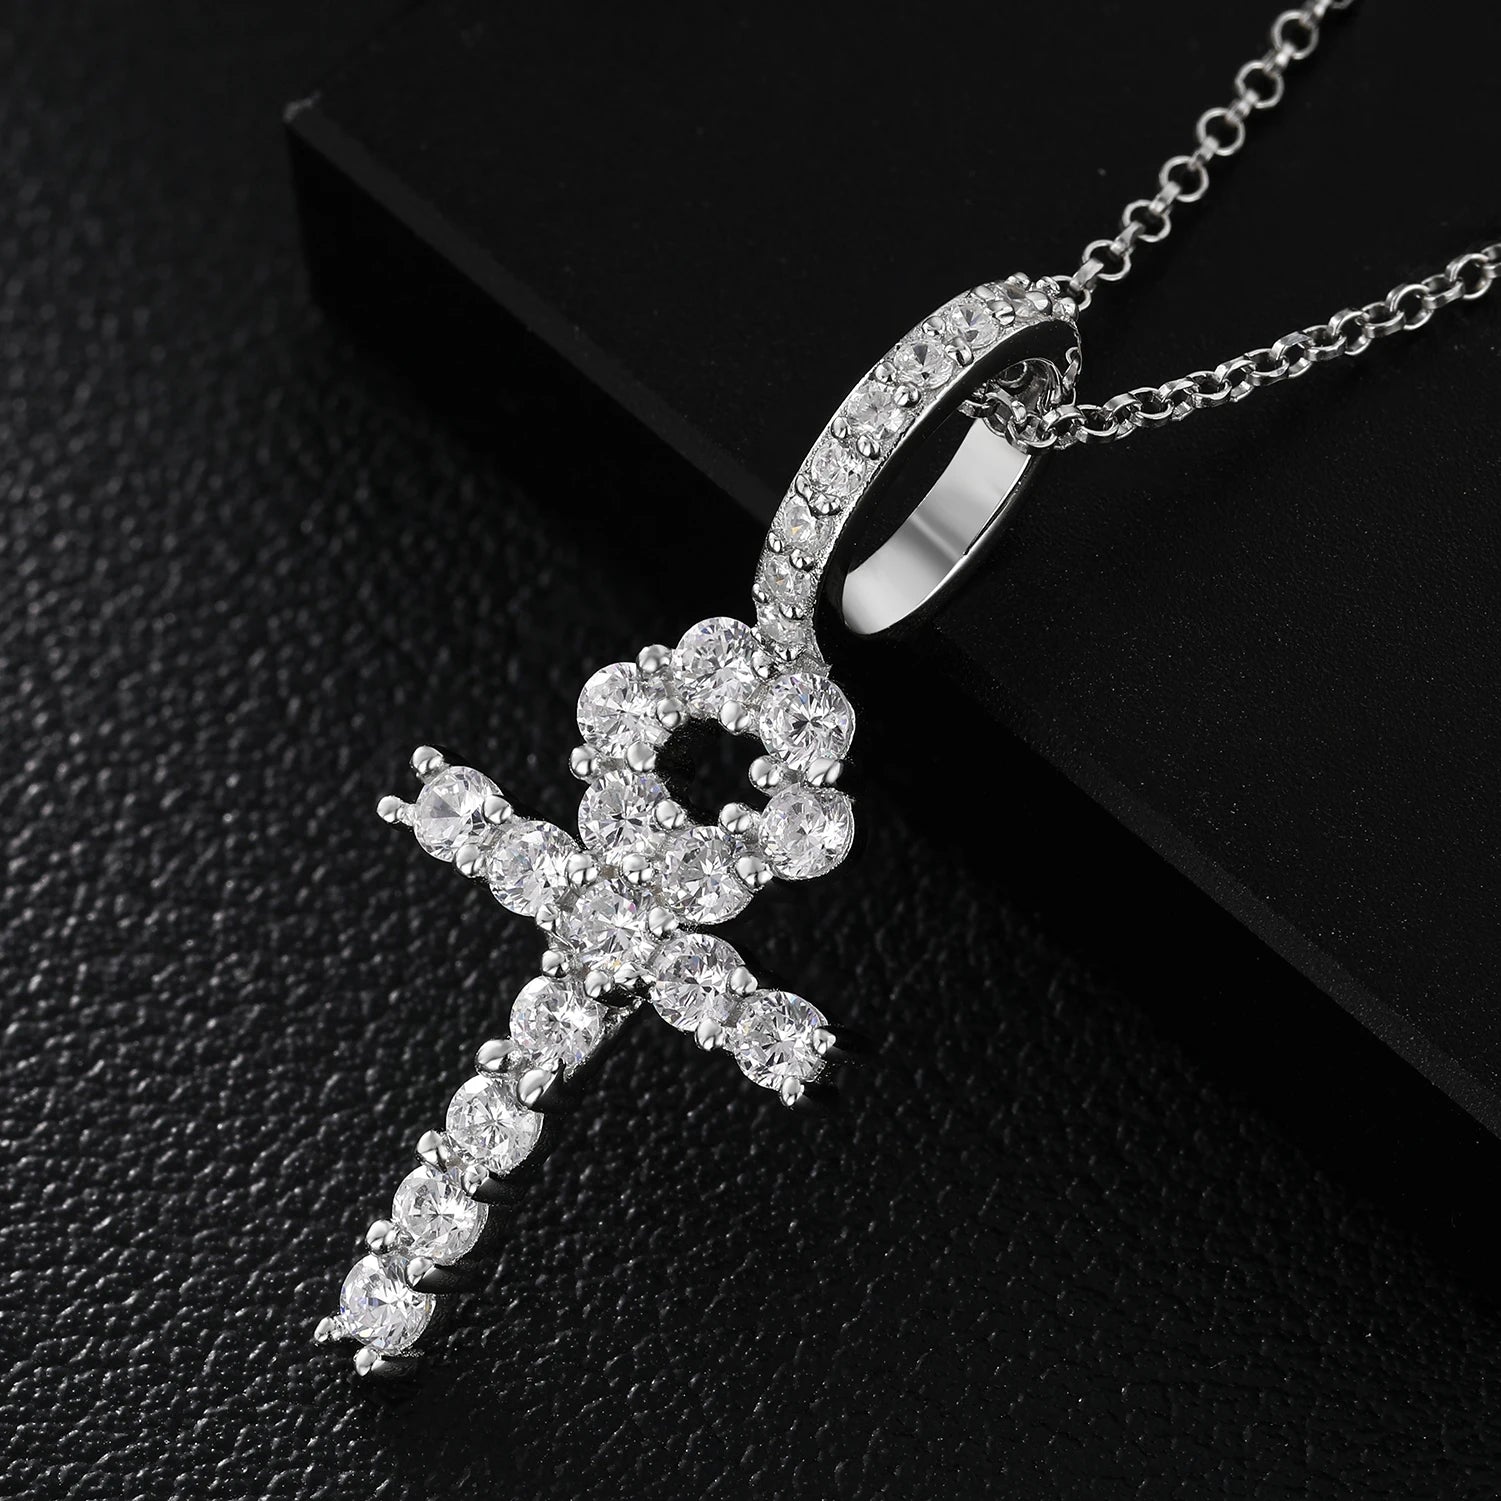 S925 Moissanite Mini Silver Iced Out Ankh Cross Diamond Pendant